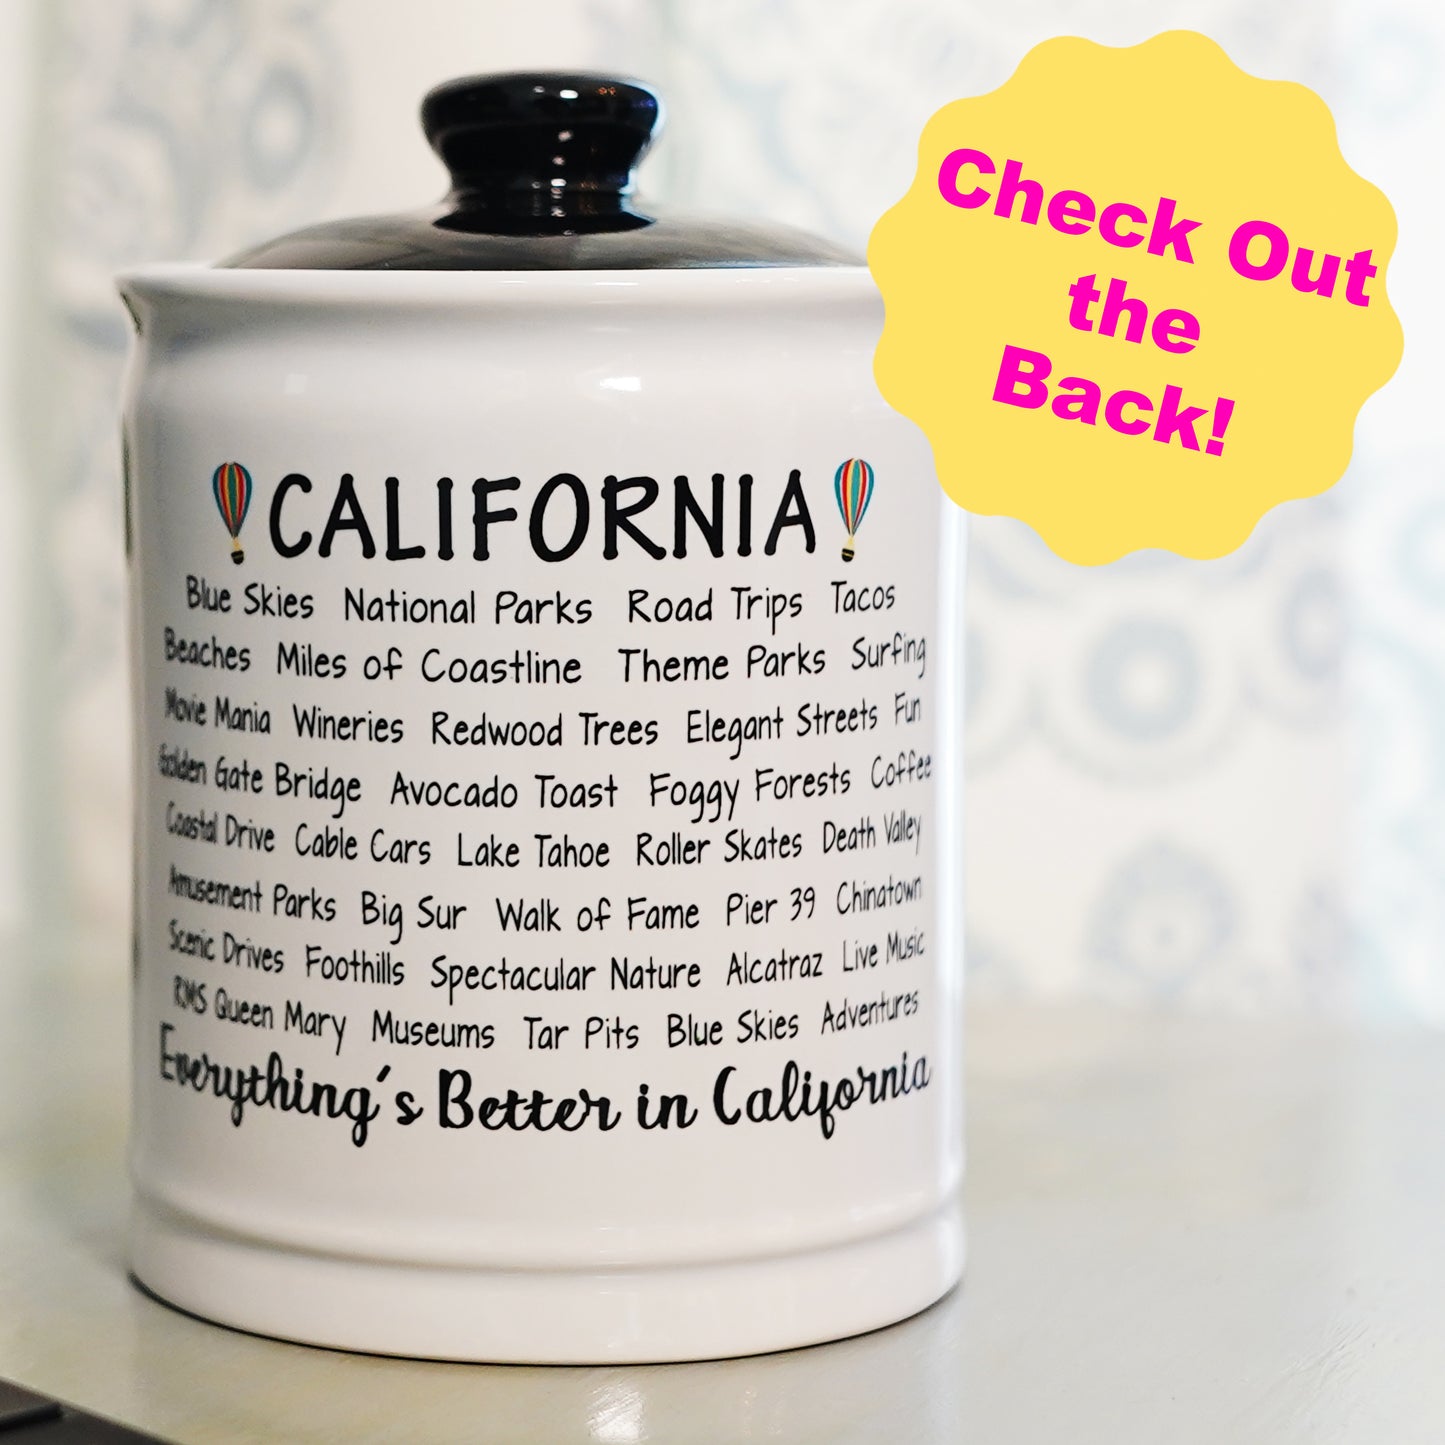 Cottage Creek California Fund Ceramic Piggy Bank, Ceramic, 6", Multicolored California Vacation Money Jar